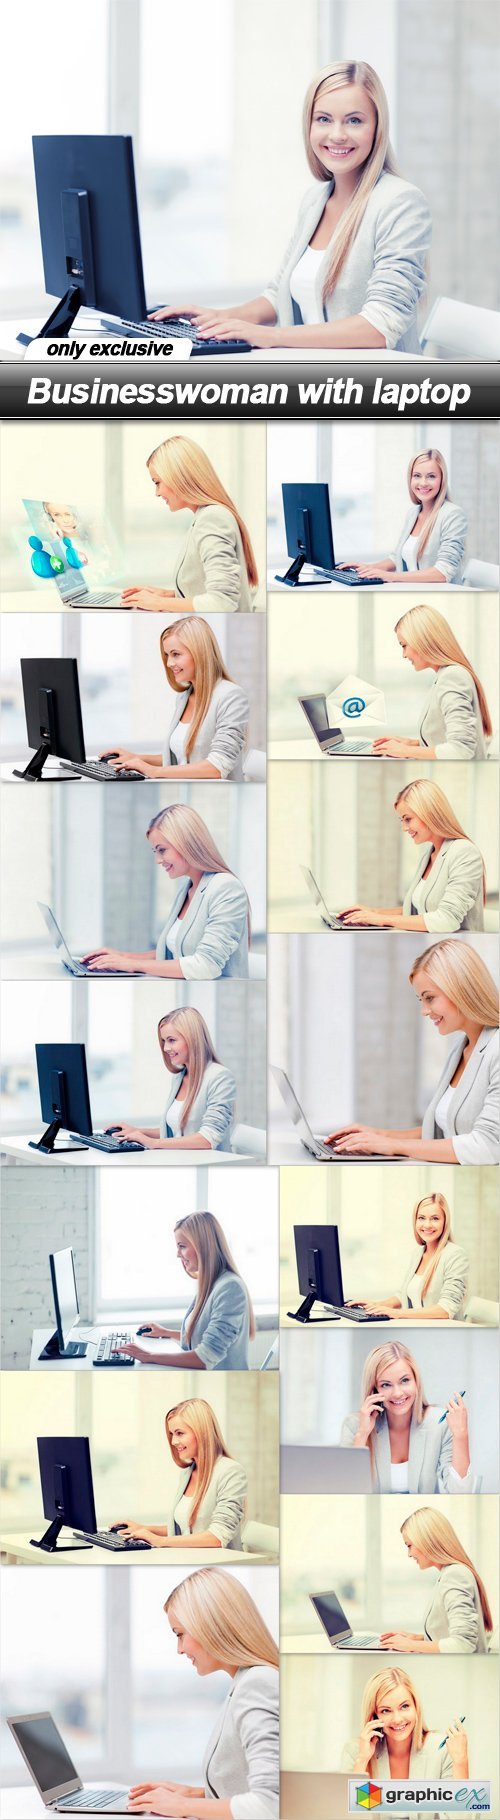 Businesswoman with laptop - 15 UHQ JPEG